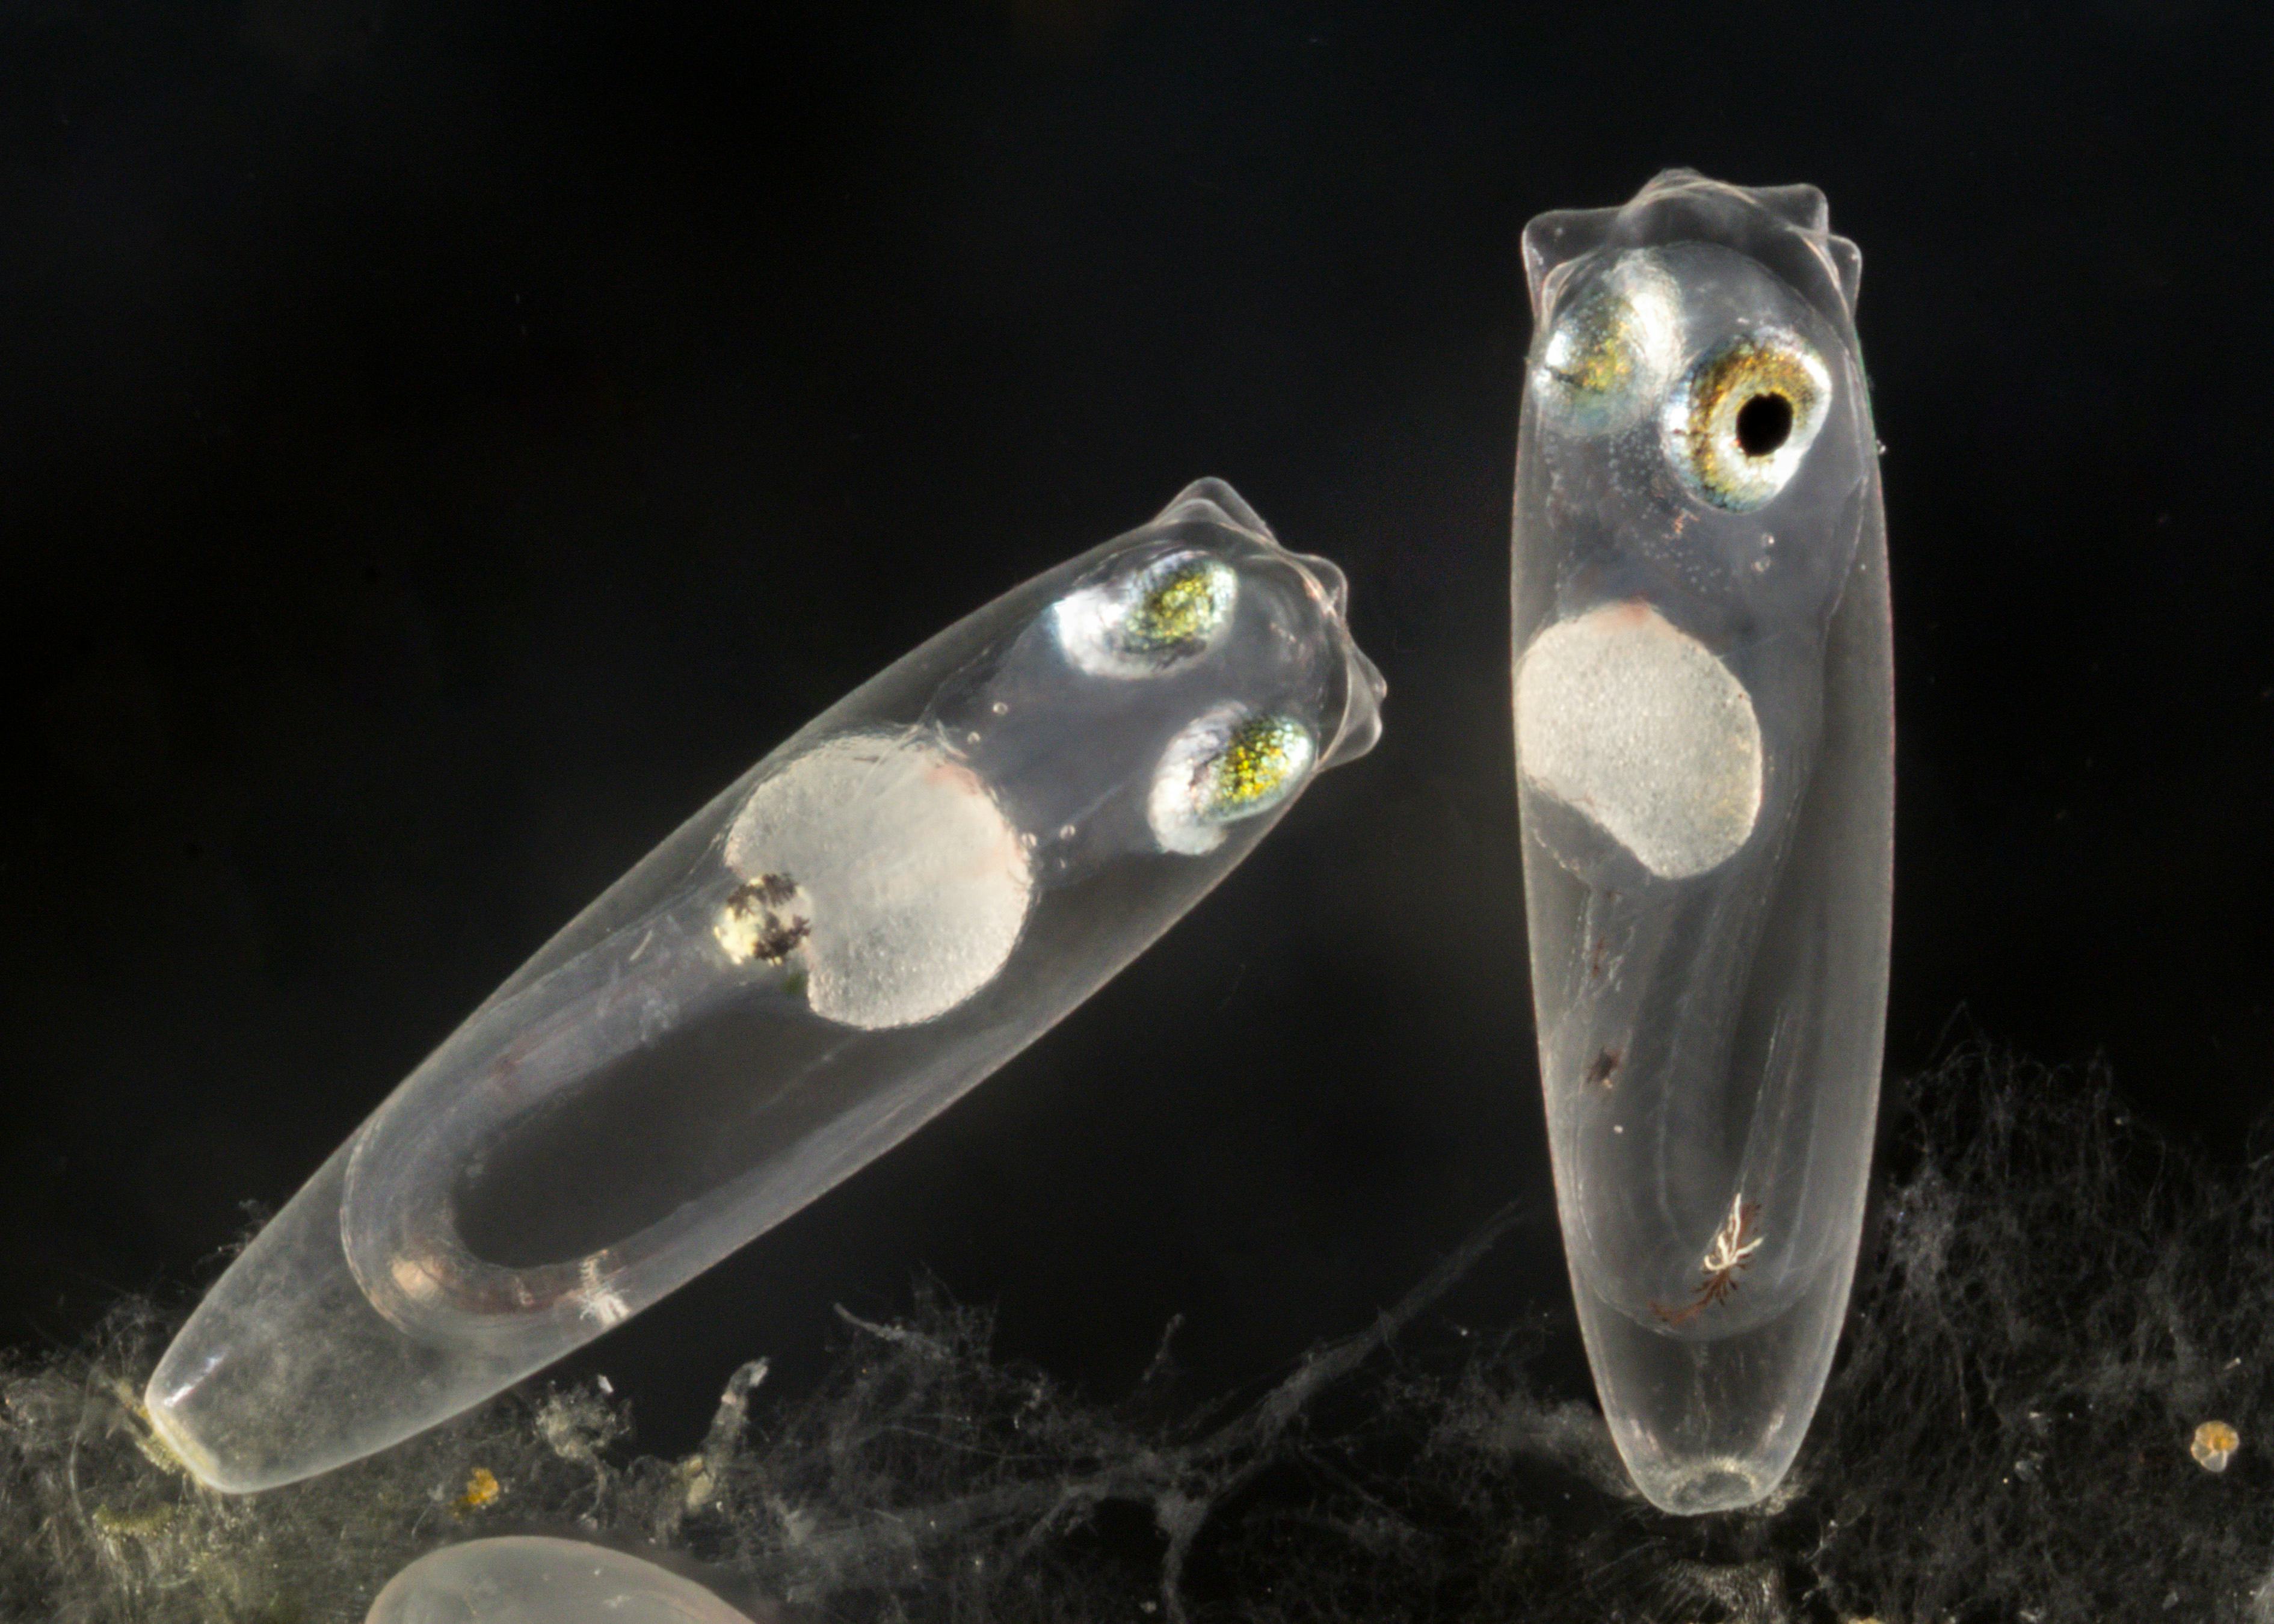 A pair of tiny transparent-seeming fish embryos with eyes visible